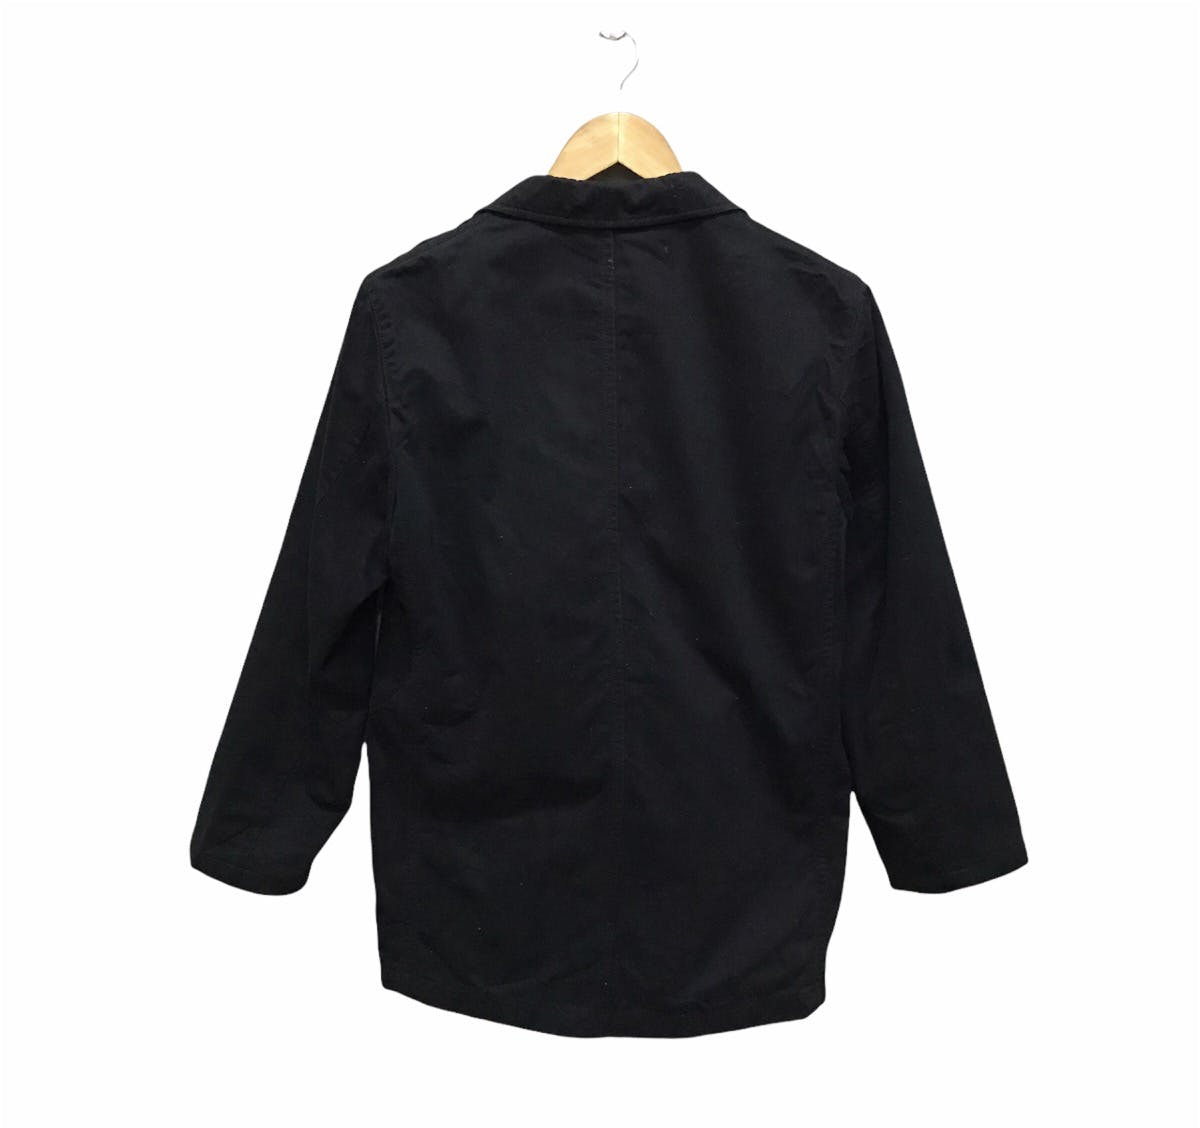 Sopnet cotton jacket - 2